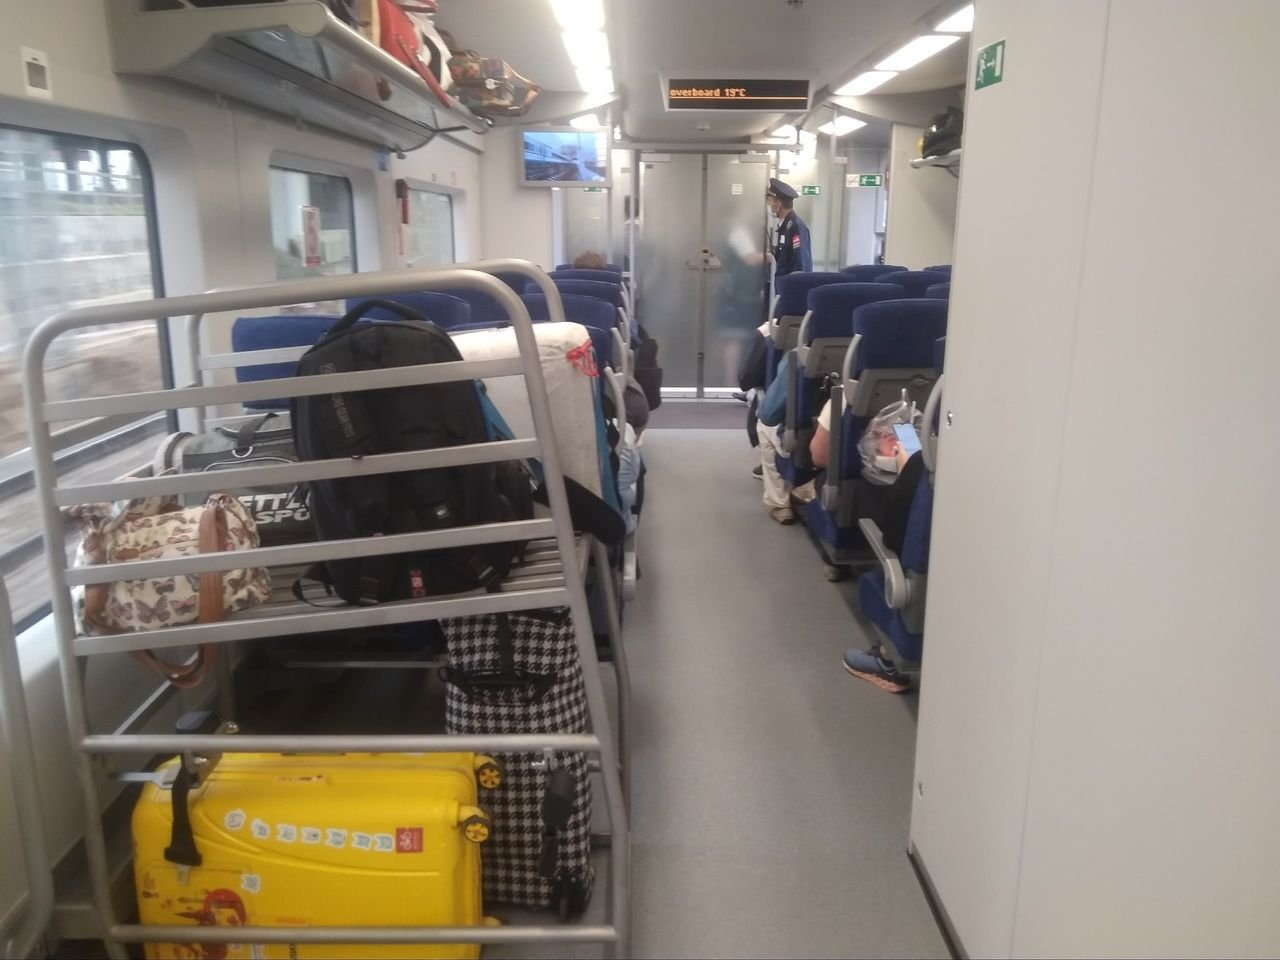 Ласточка поезд фото внутри вагона москва